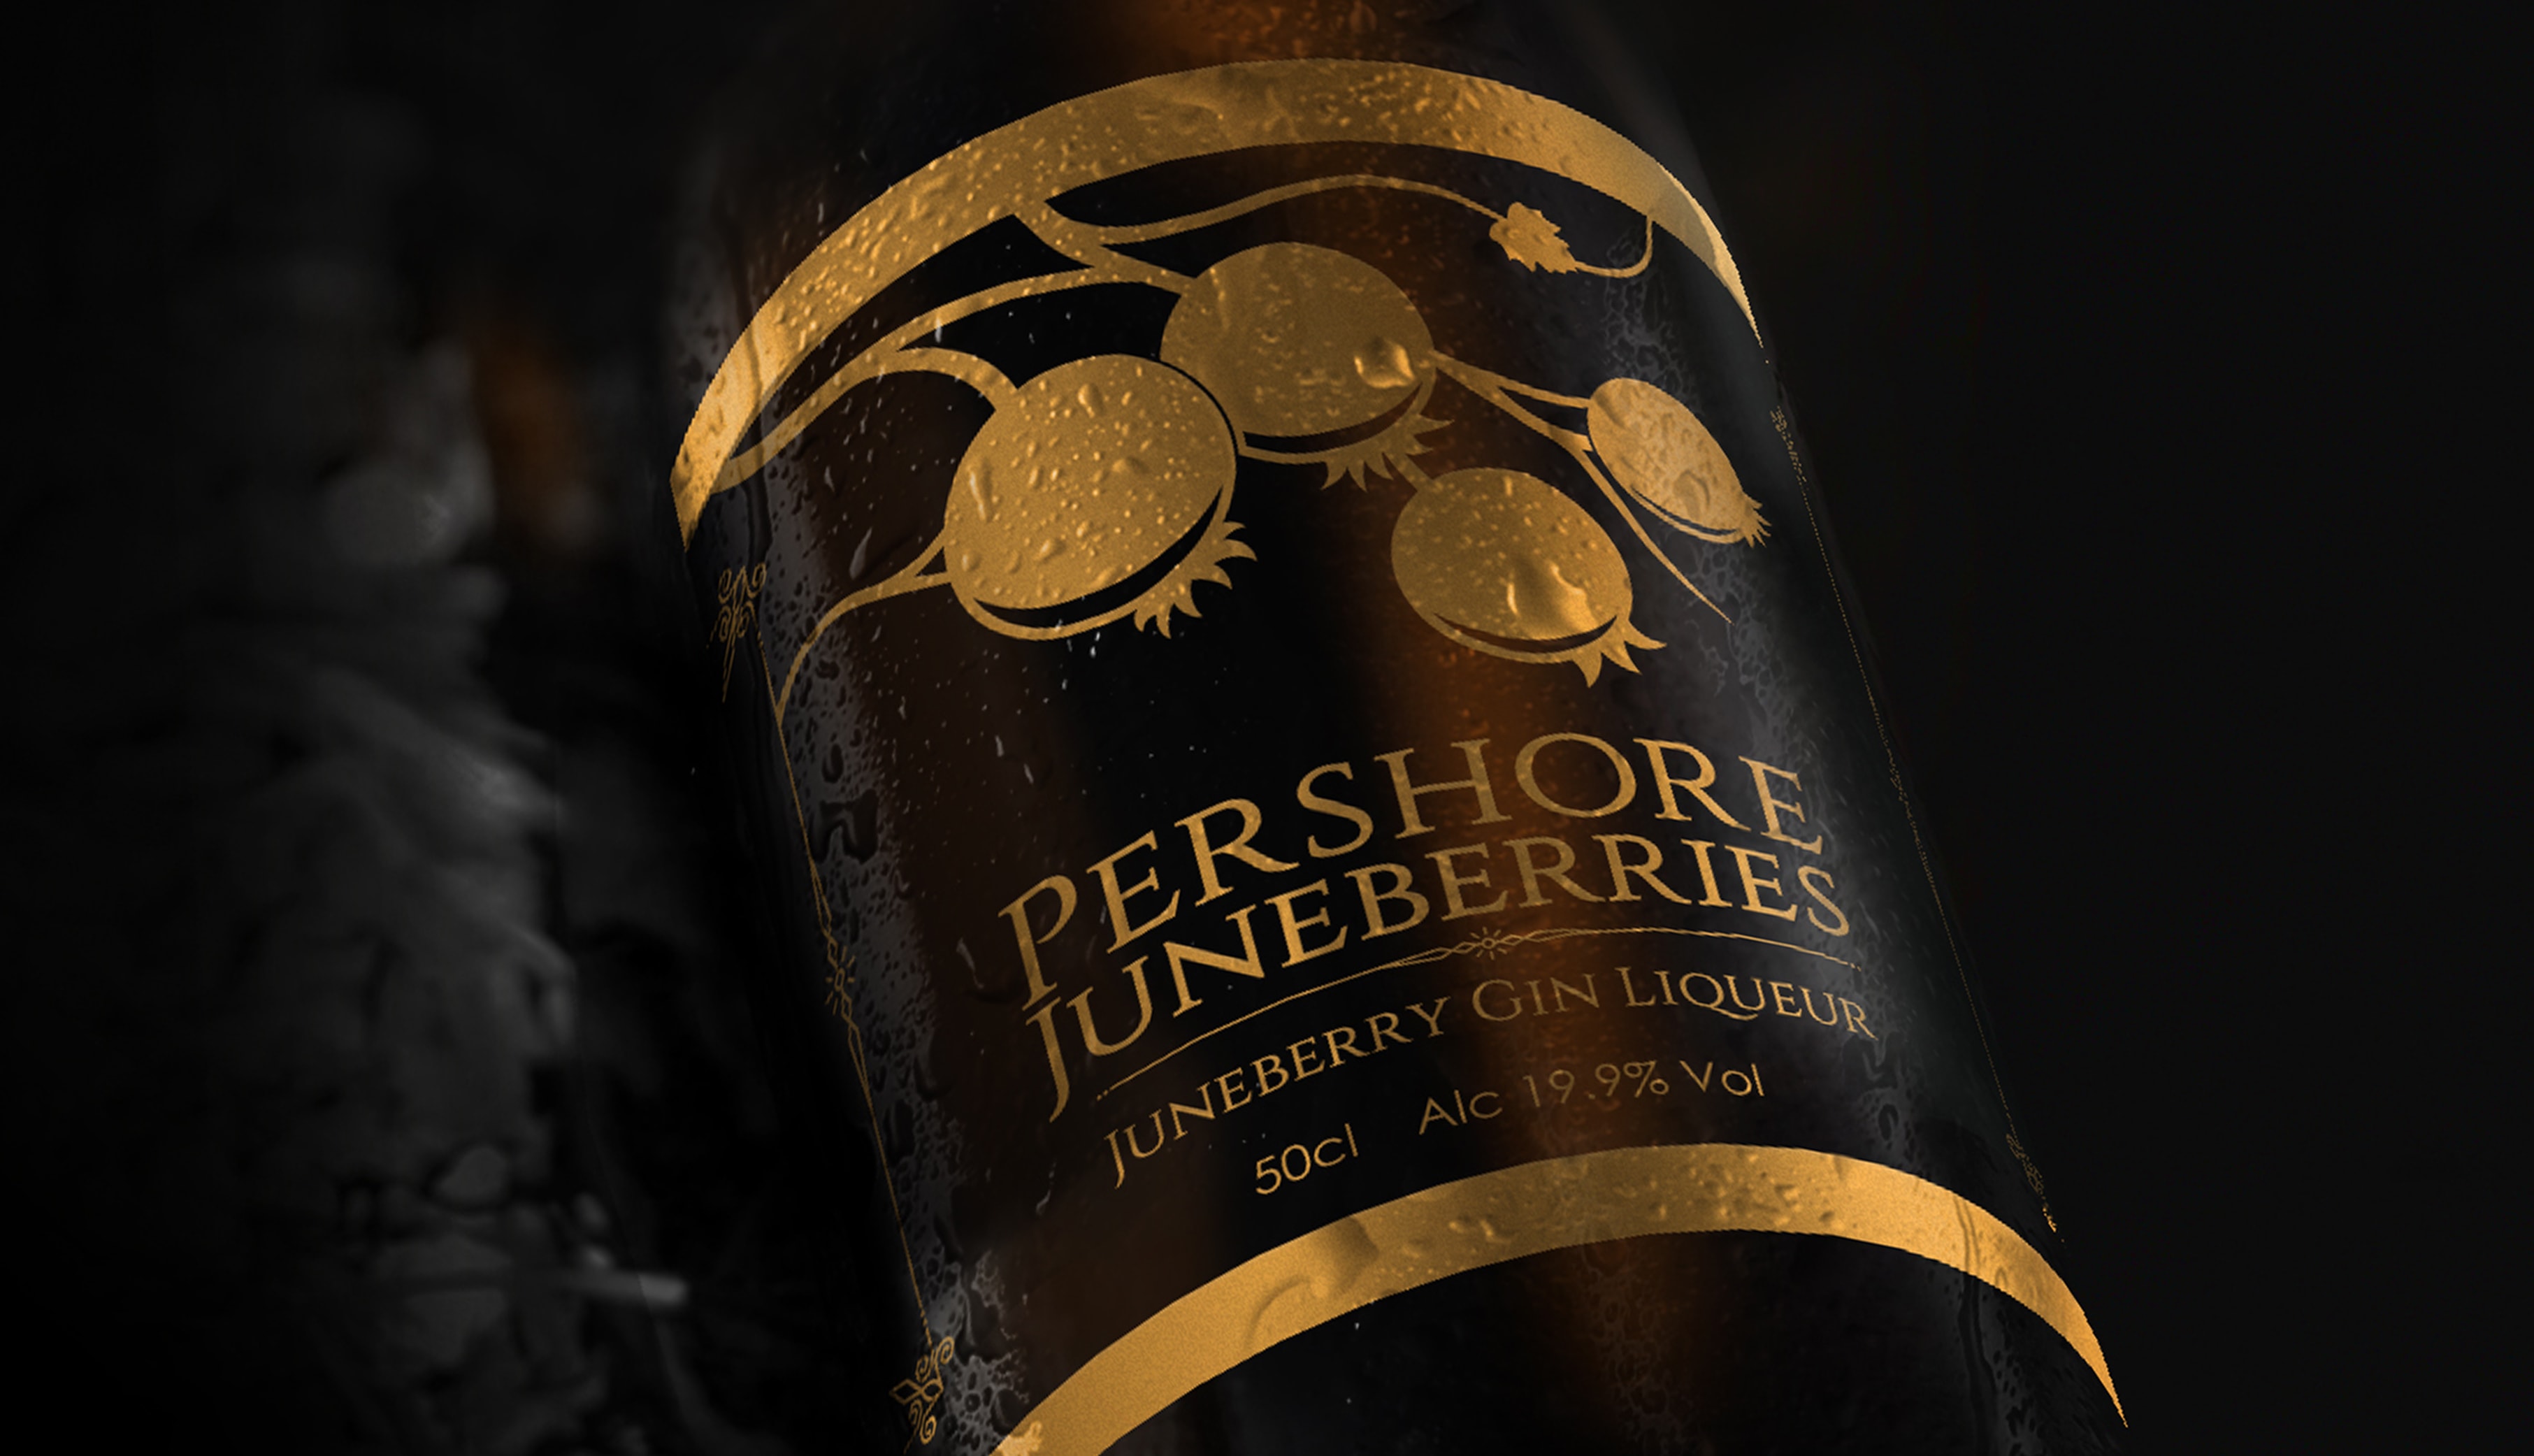 Pershore Juneberries - Gin Packaging